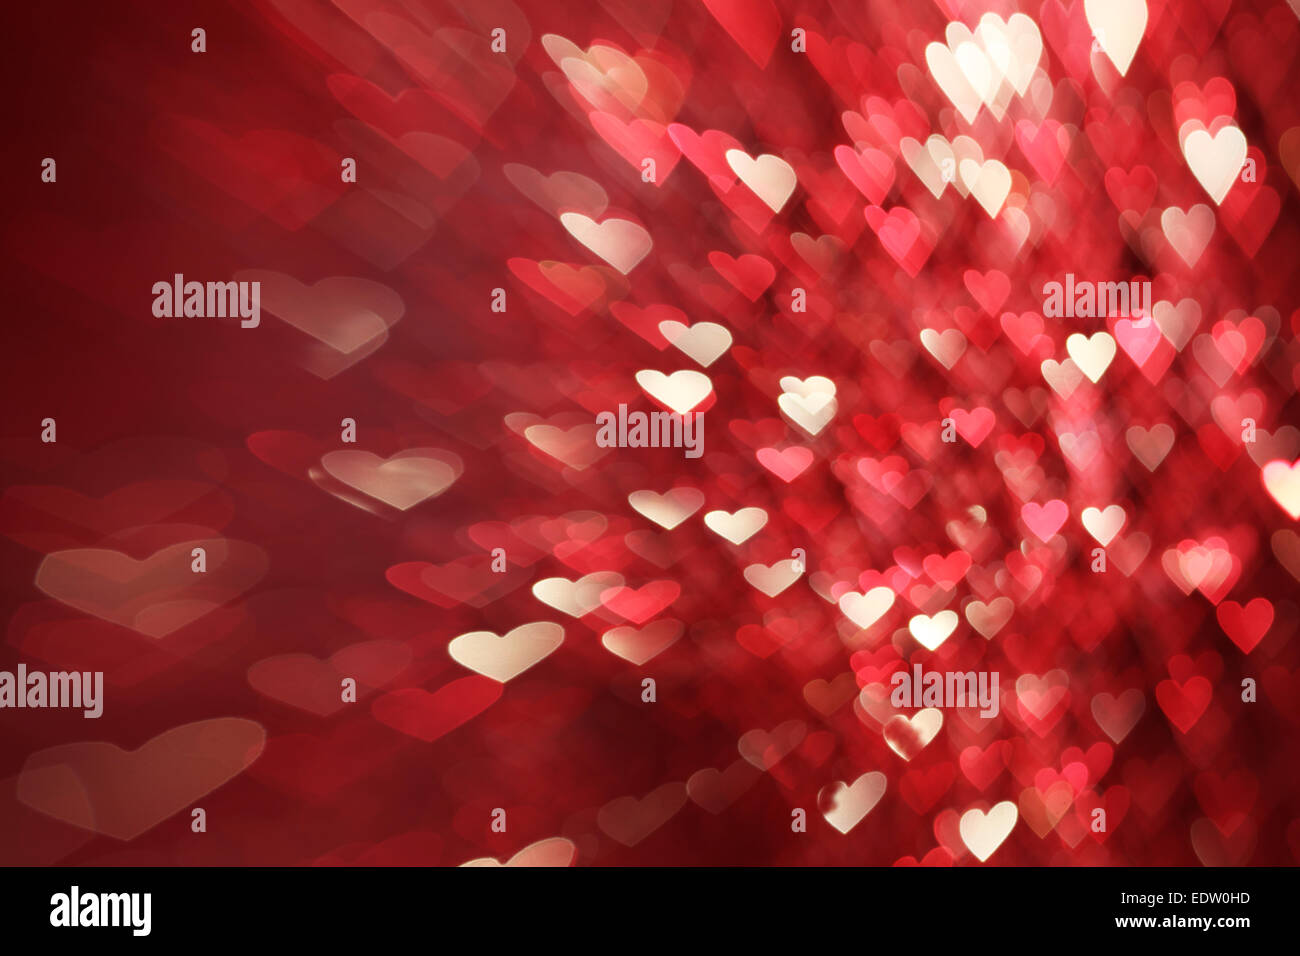 Hearts background Stock Photo